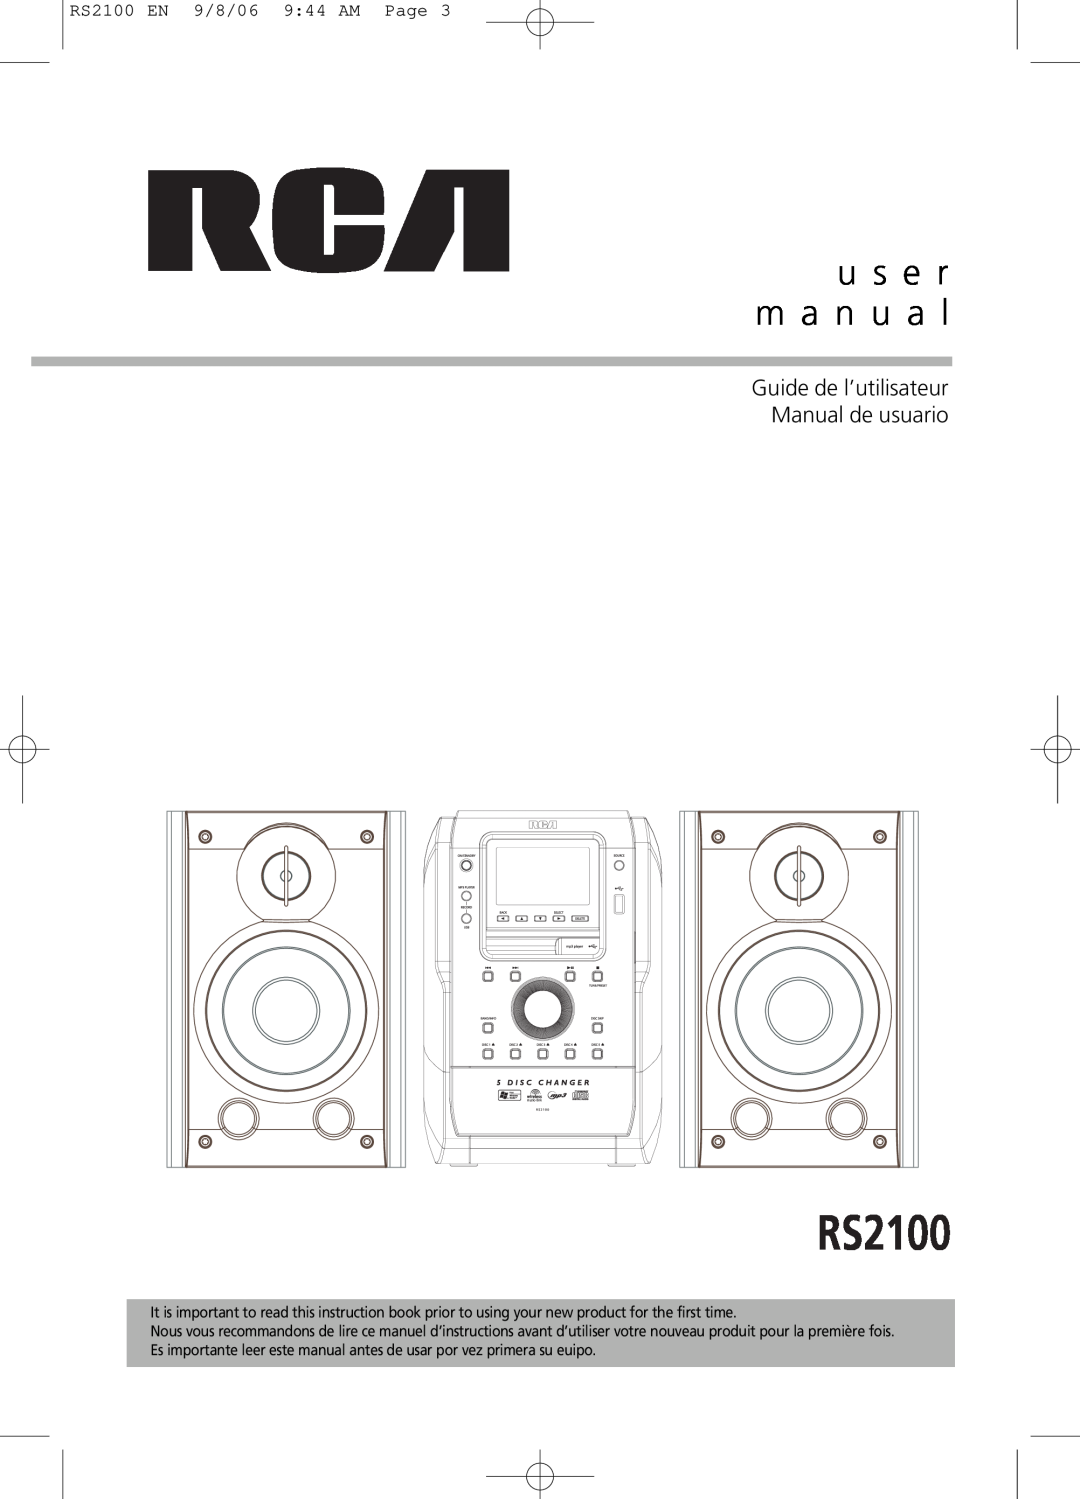 RCA user manual Guide de l’utilisateur Manual de usuario, u s e r m a n u a l, RS2100 EN 9/8/06 9 44 AM Page 